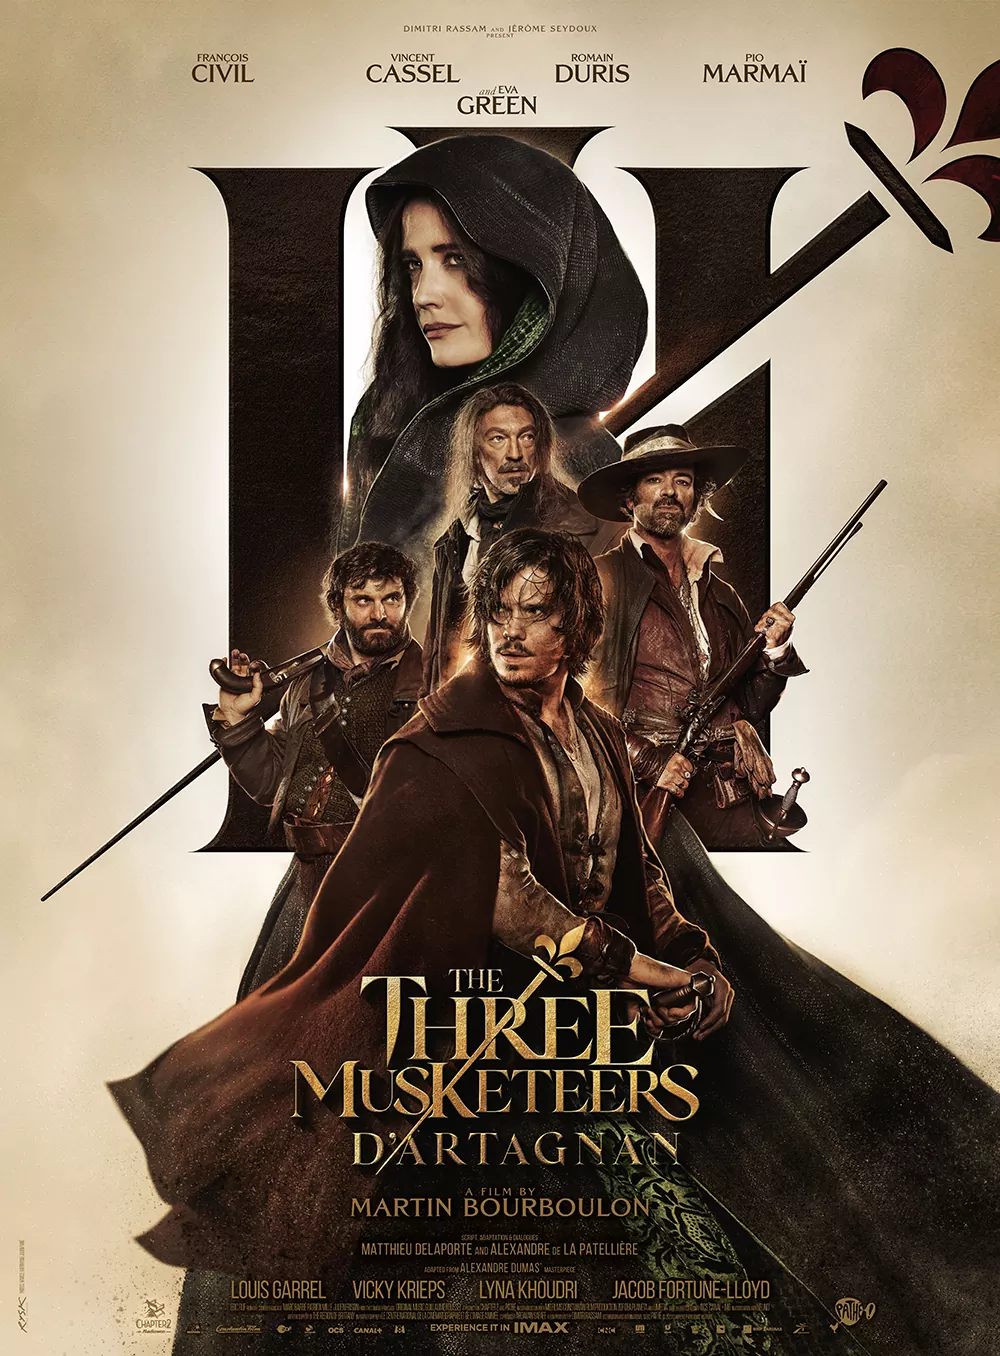 Trailer Από Το "The Three Musketeers D’Artagnan"